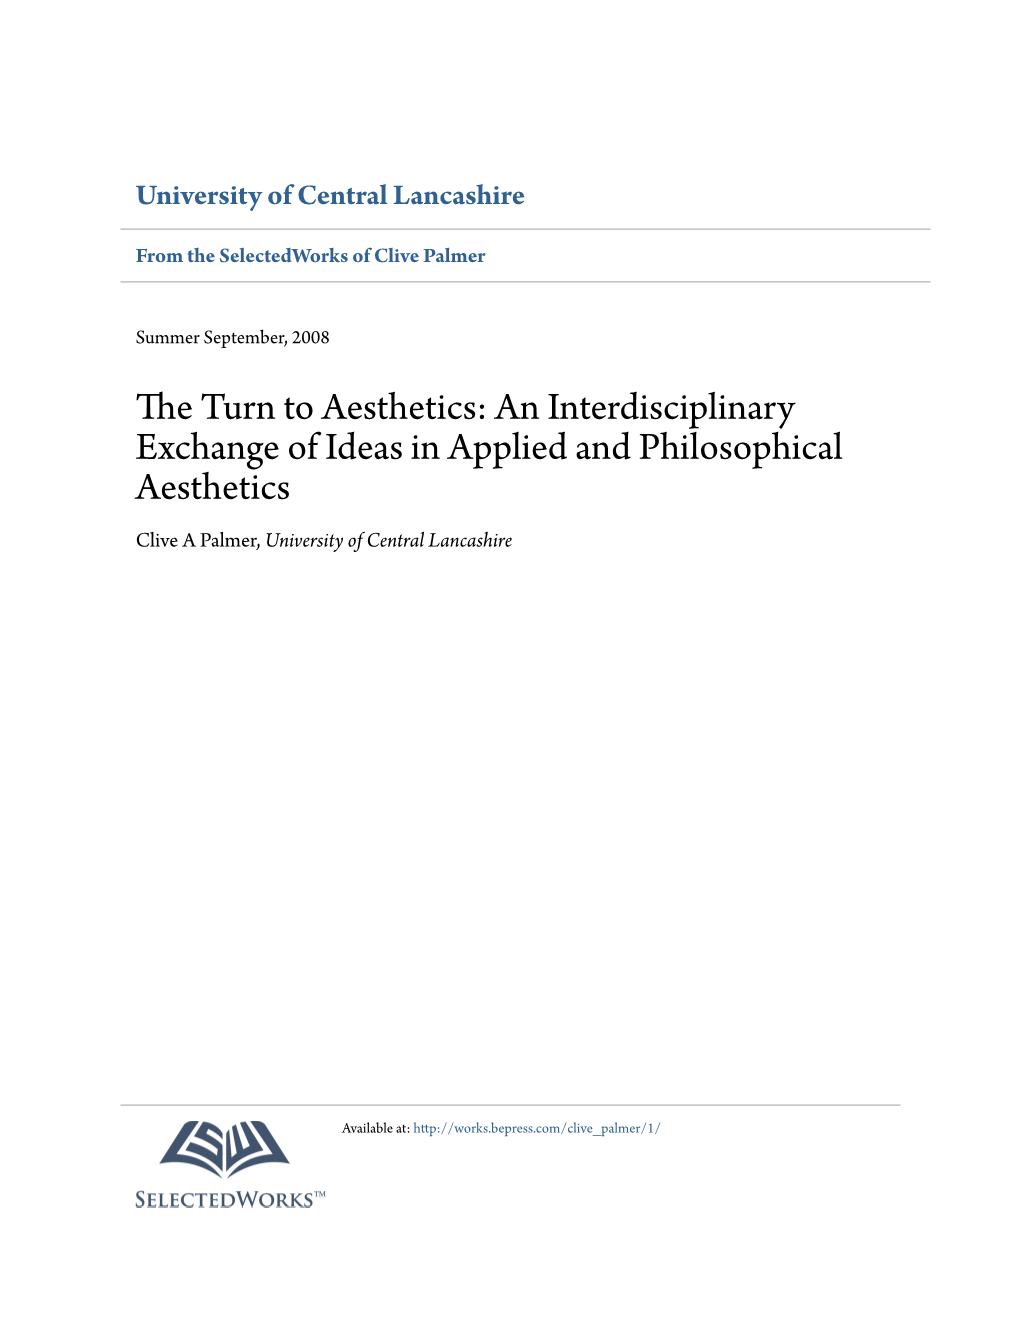 The Turn to Aesthetics: an Interdisciplinary Exchange of Ideas